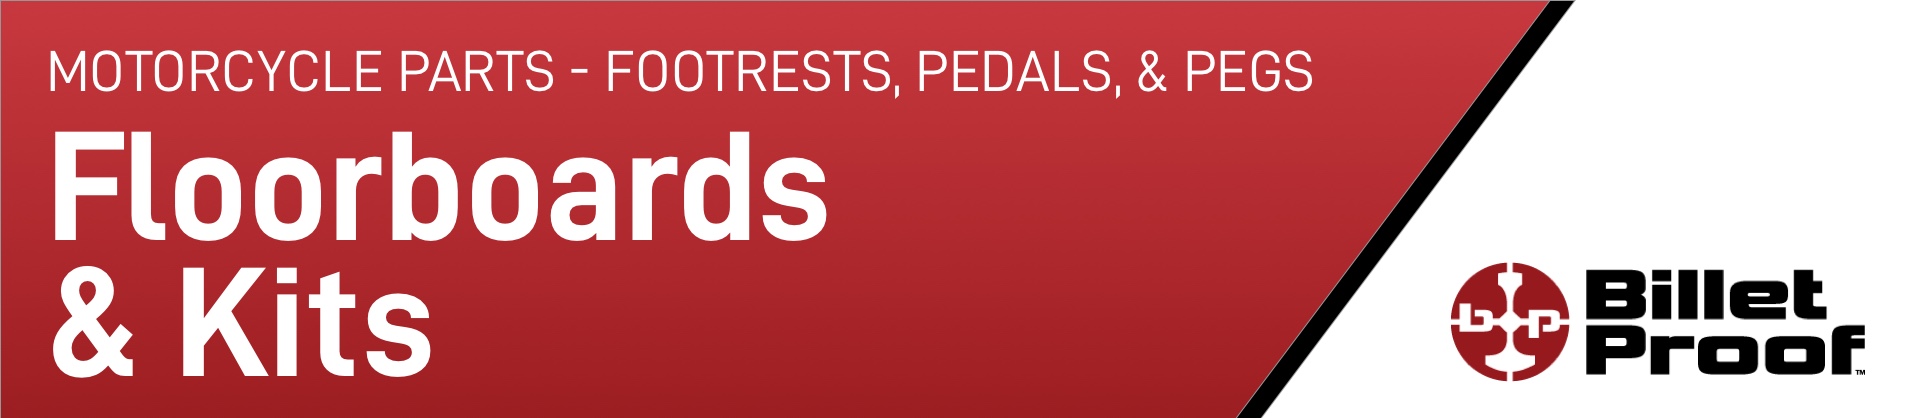 motorcycle-parts-footrests-pedals-pegs-floorboards-kits.jpg